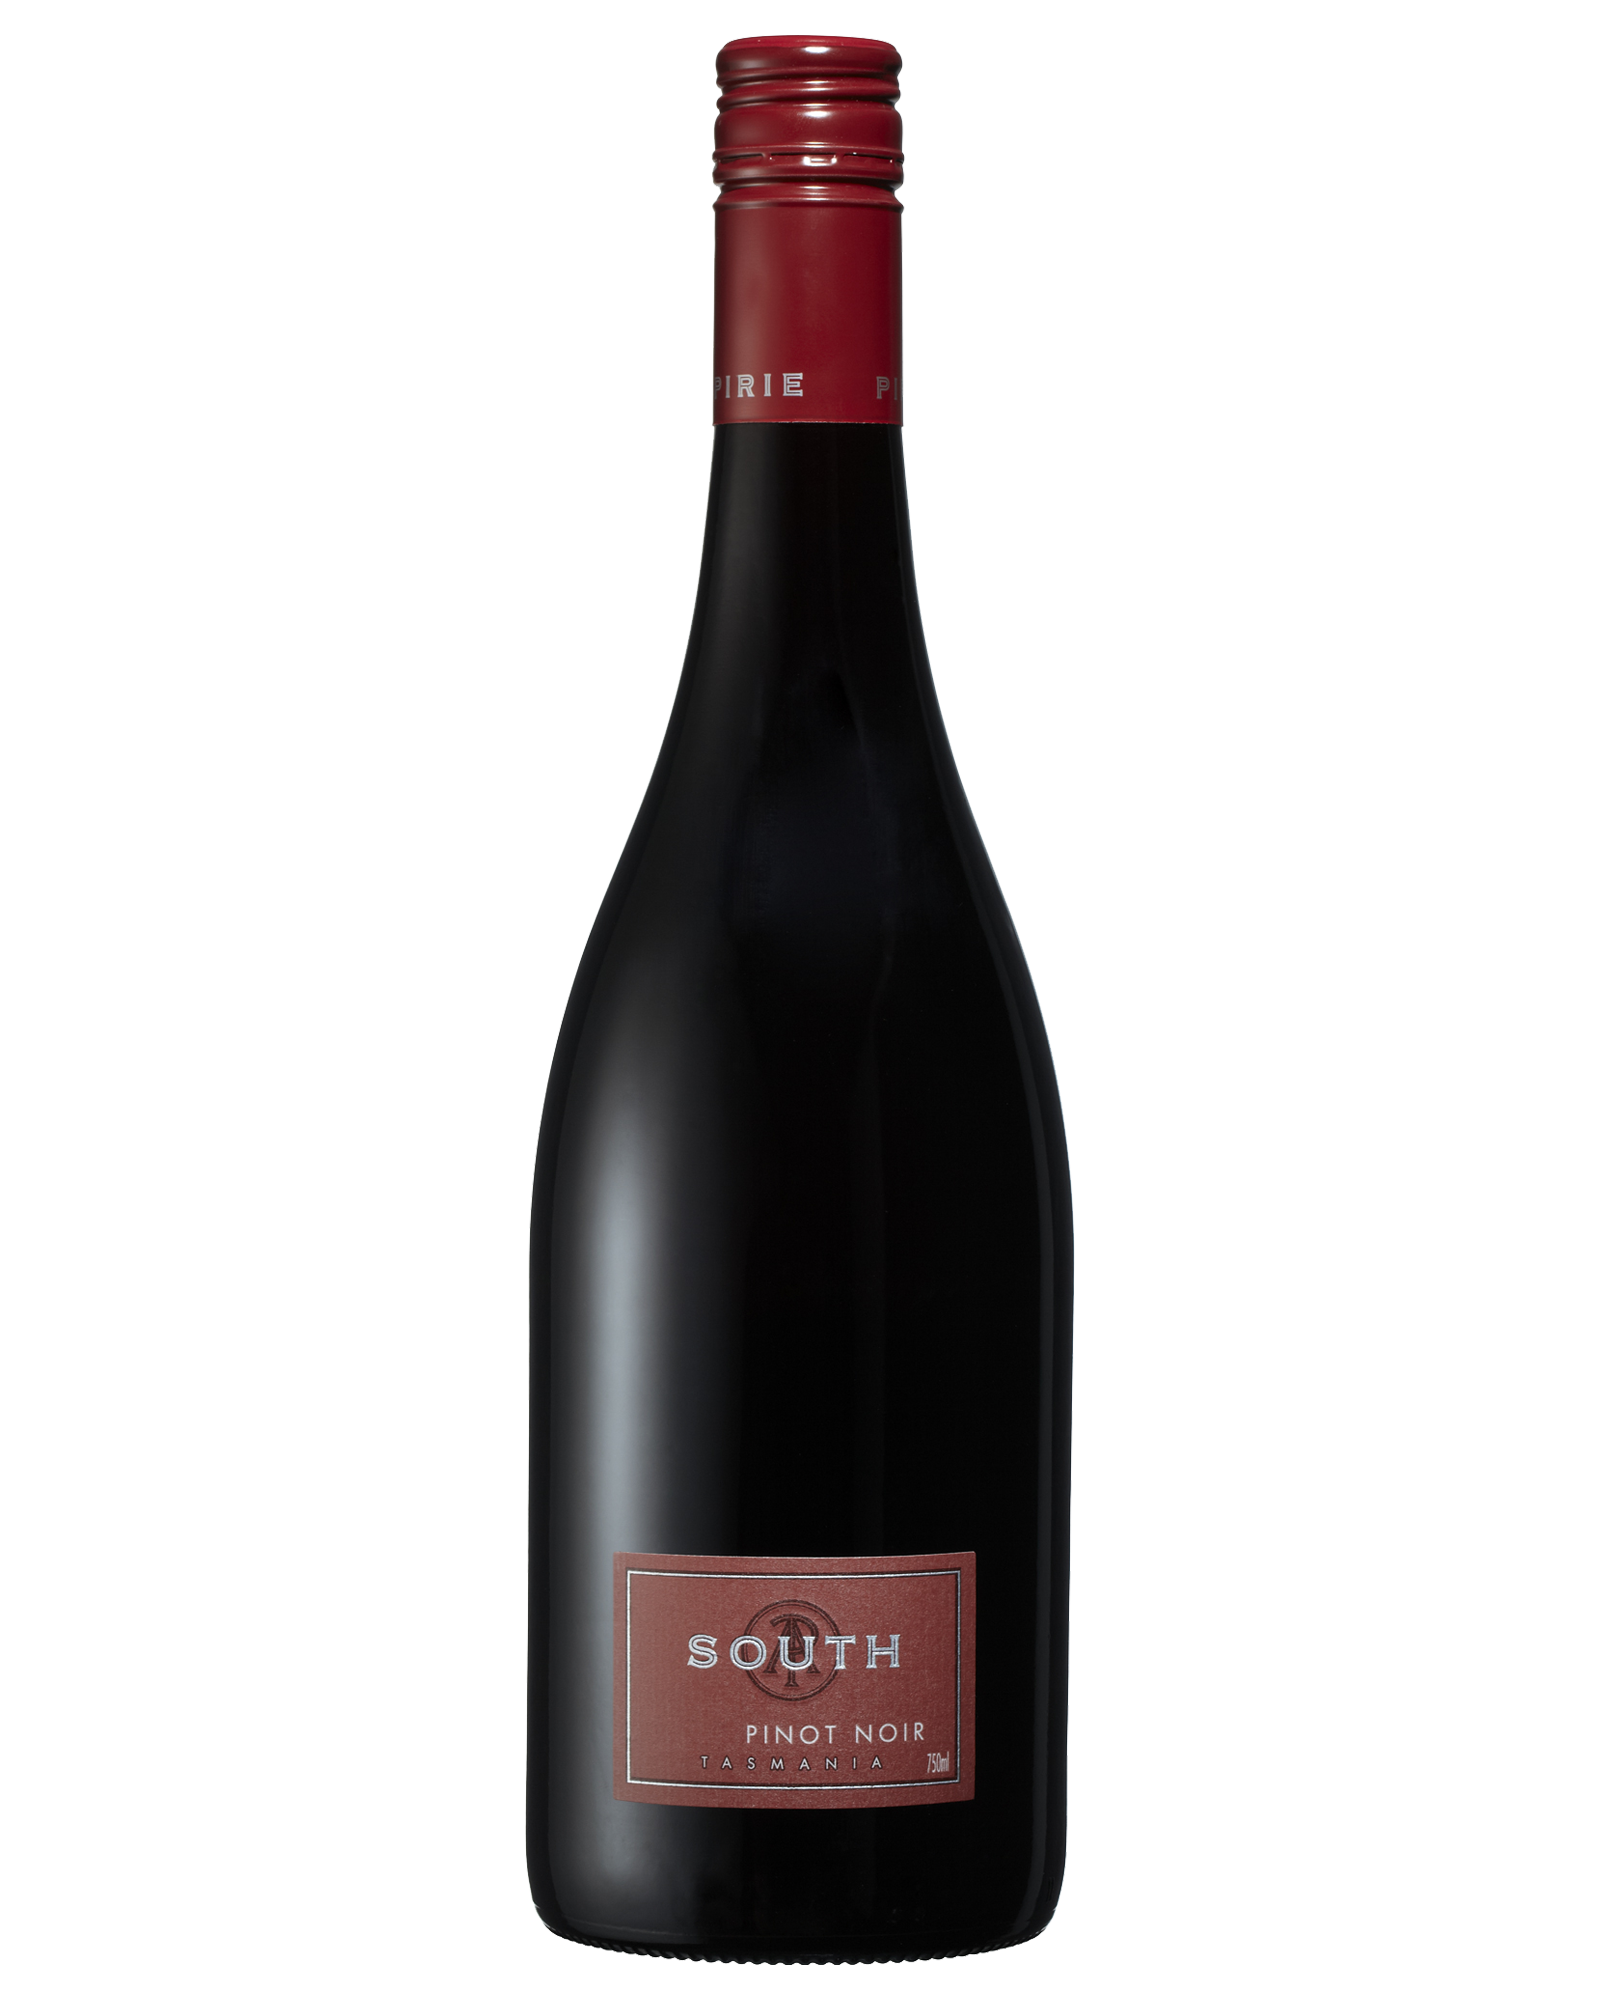 Pirie South Pinot Noir